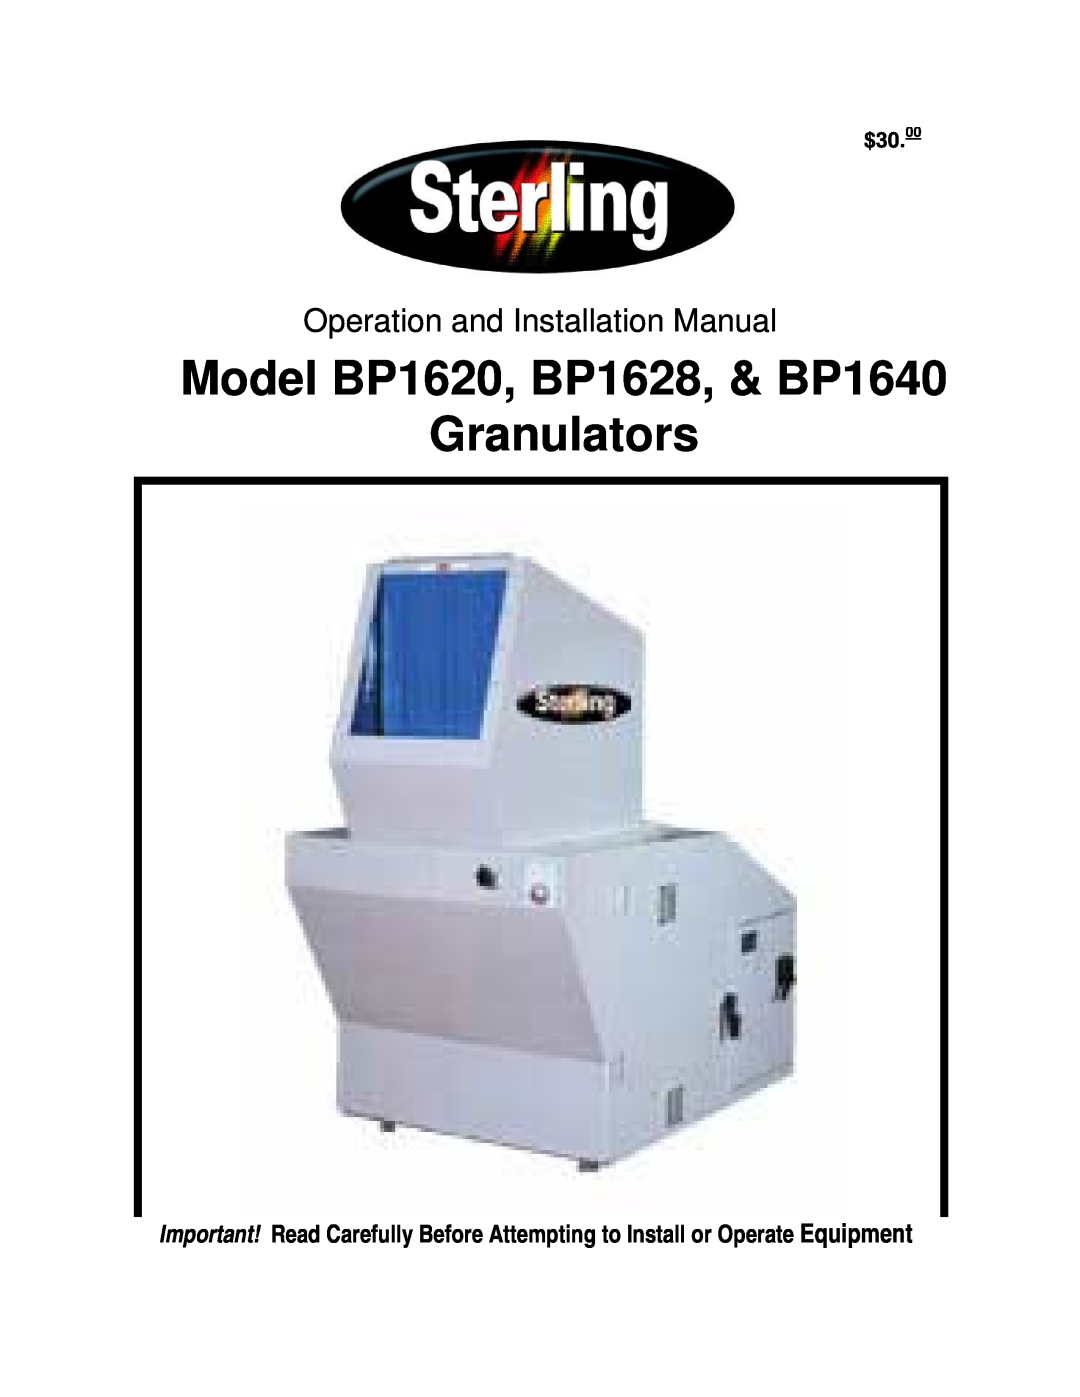 Sterling installation manual Model BP1620, BP1628, & BP1640, Granulators, Operation and Installation Manual, $30.00 